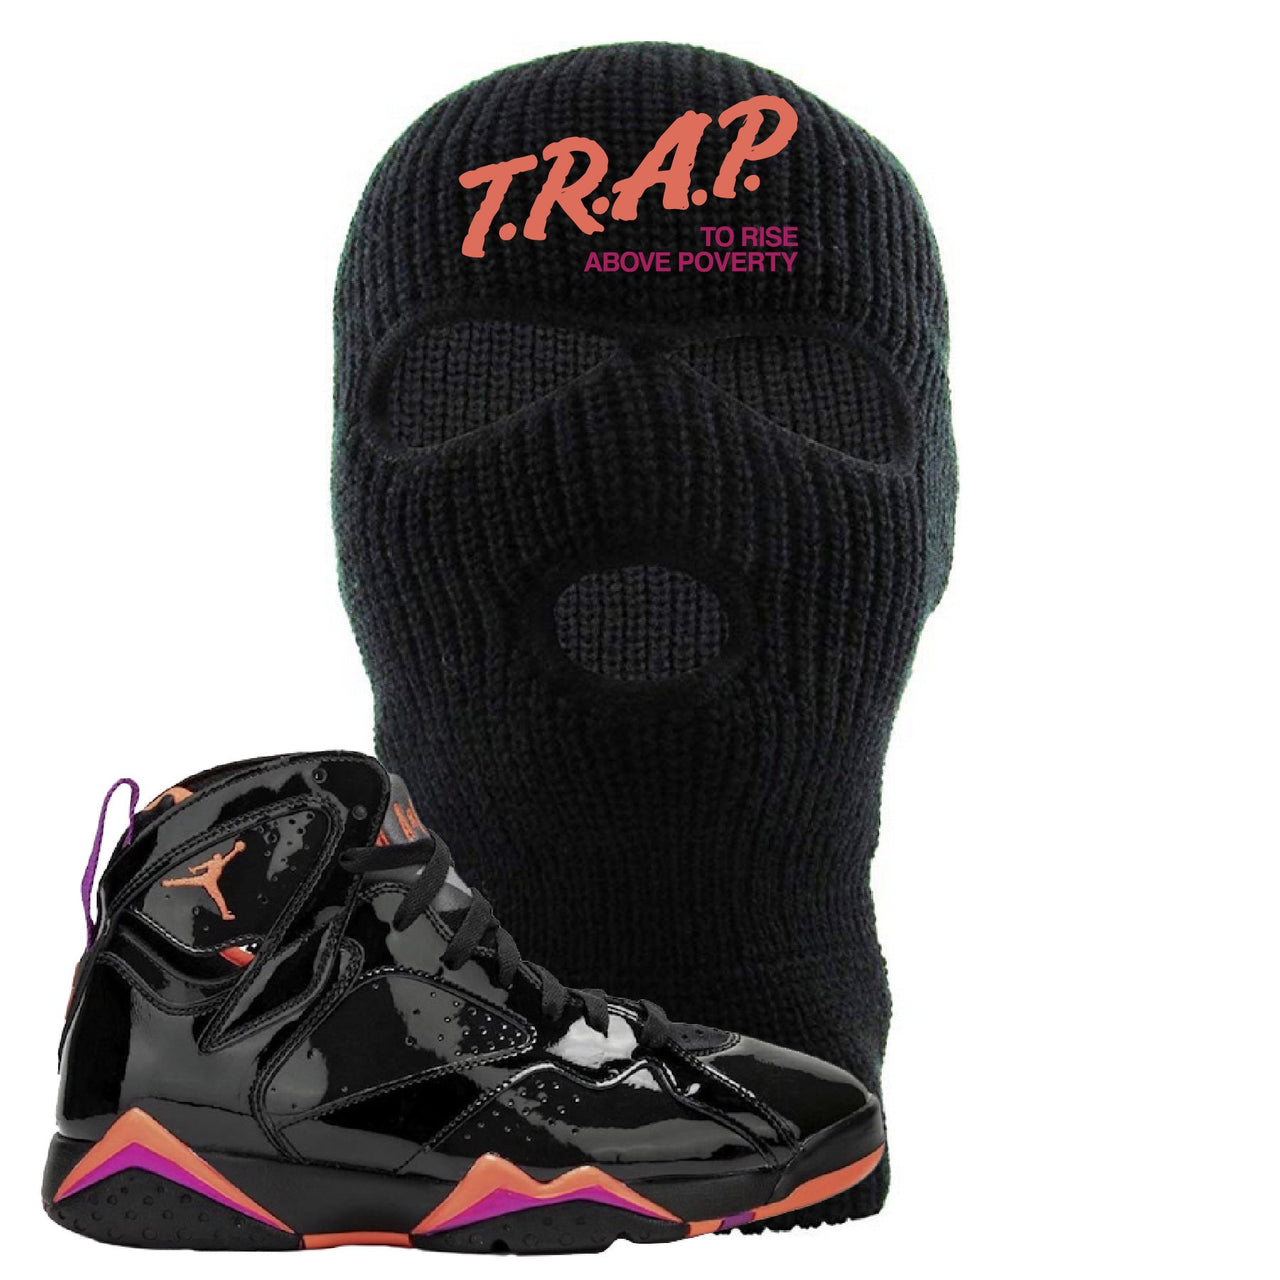 Jordan 7 WMNS Black Patent Leather Trap To Rise Above Poverty Black Sneaker Hook Up Ski Mask